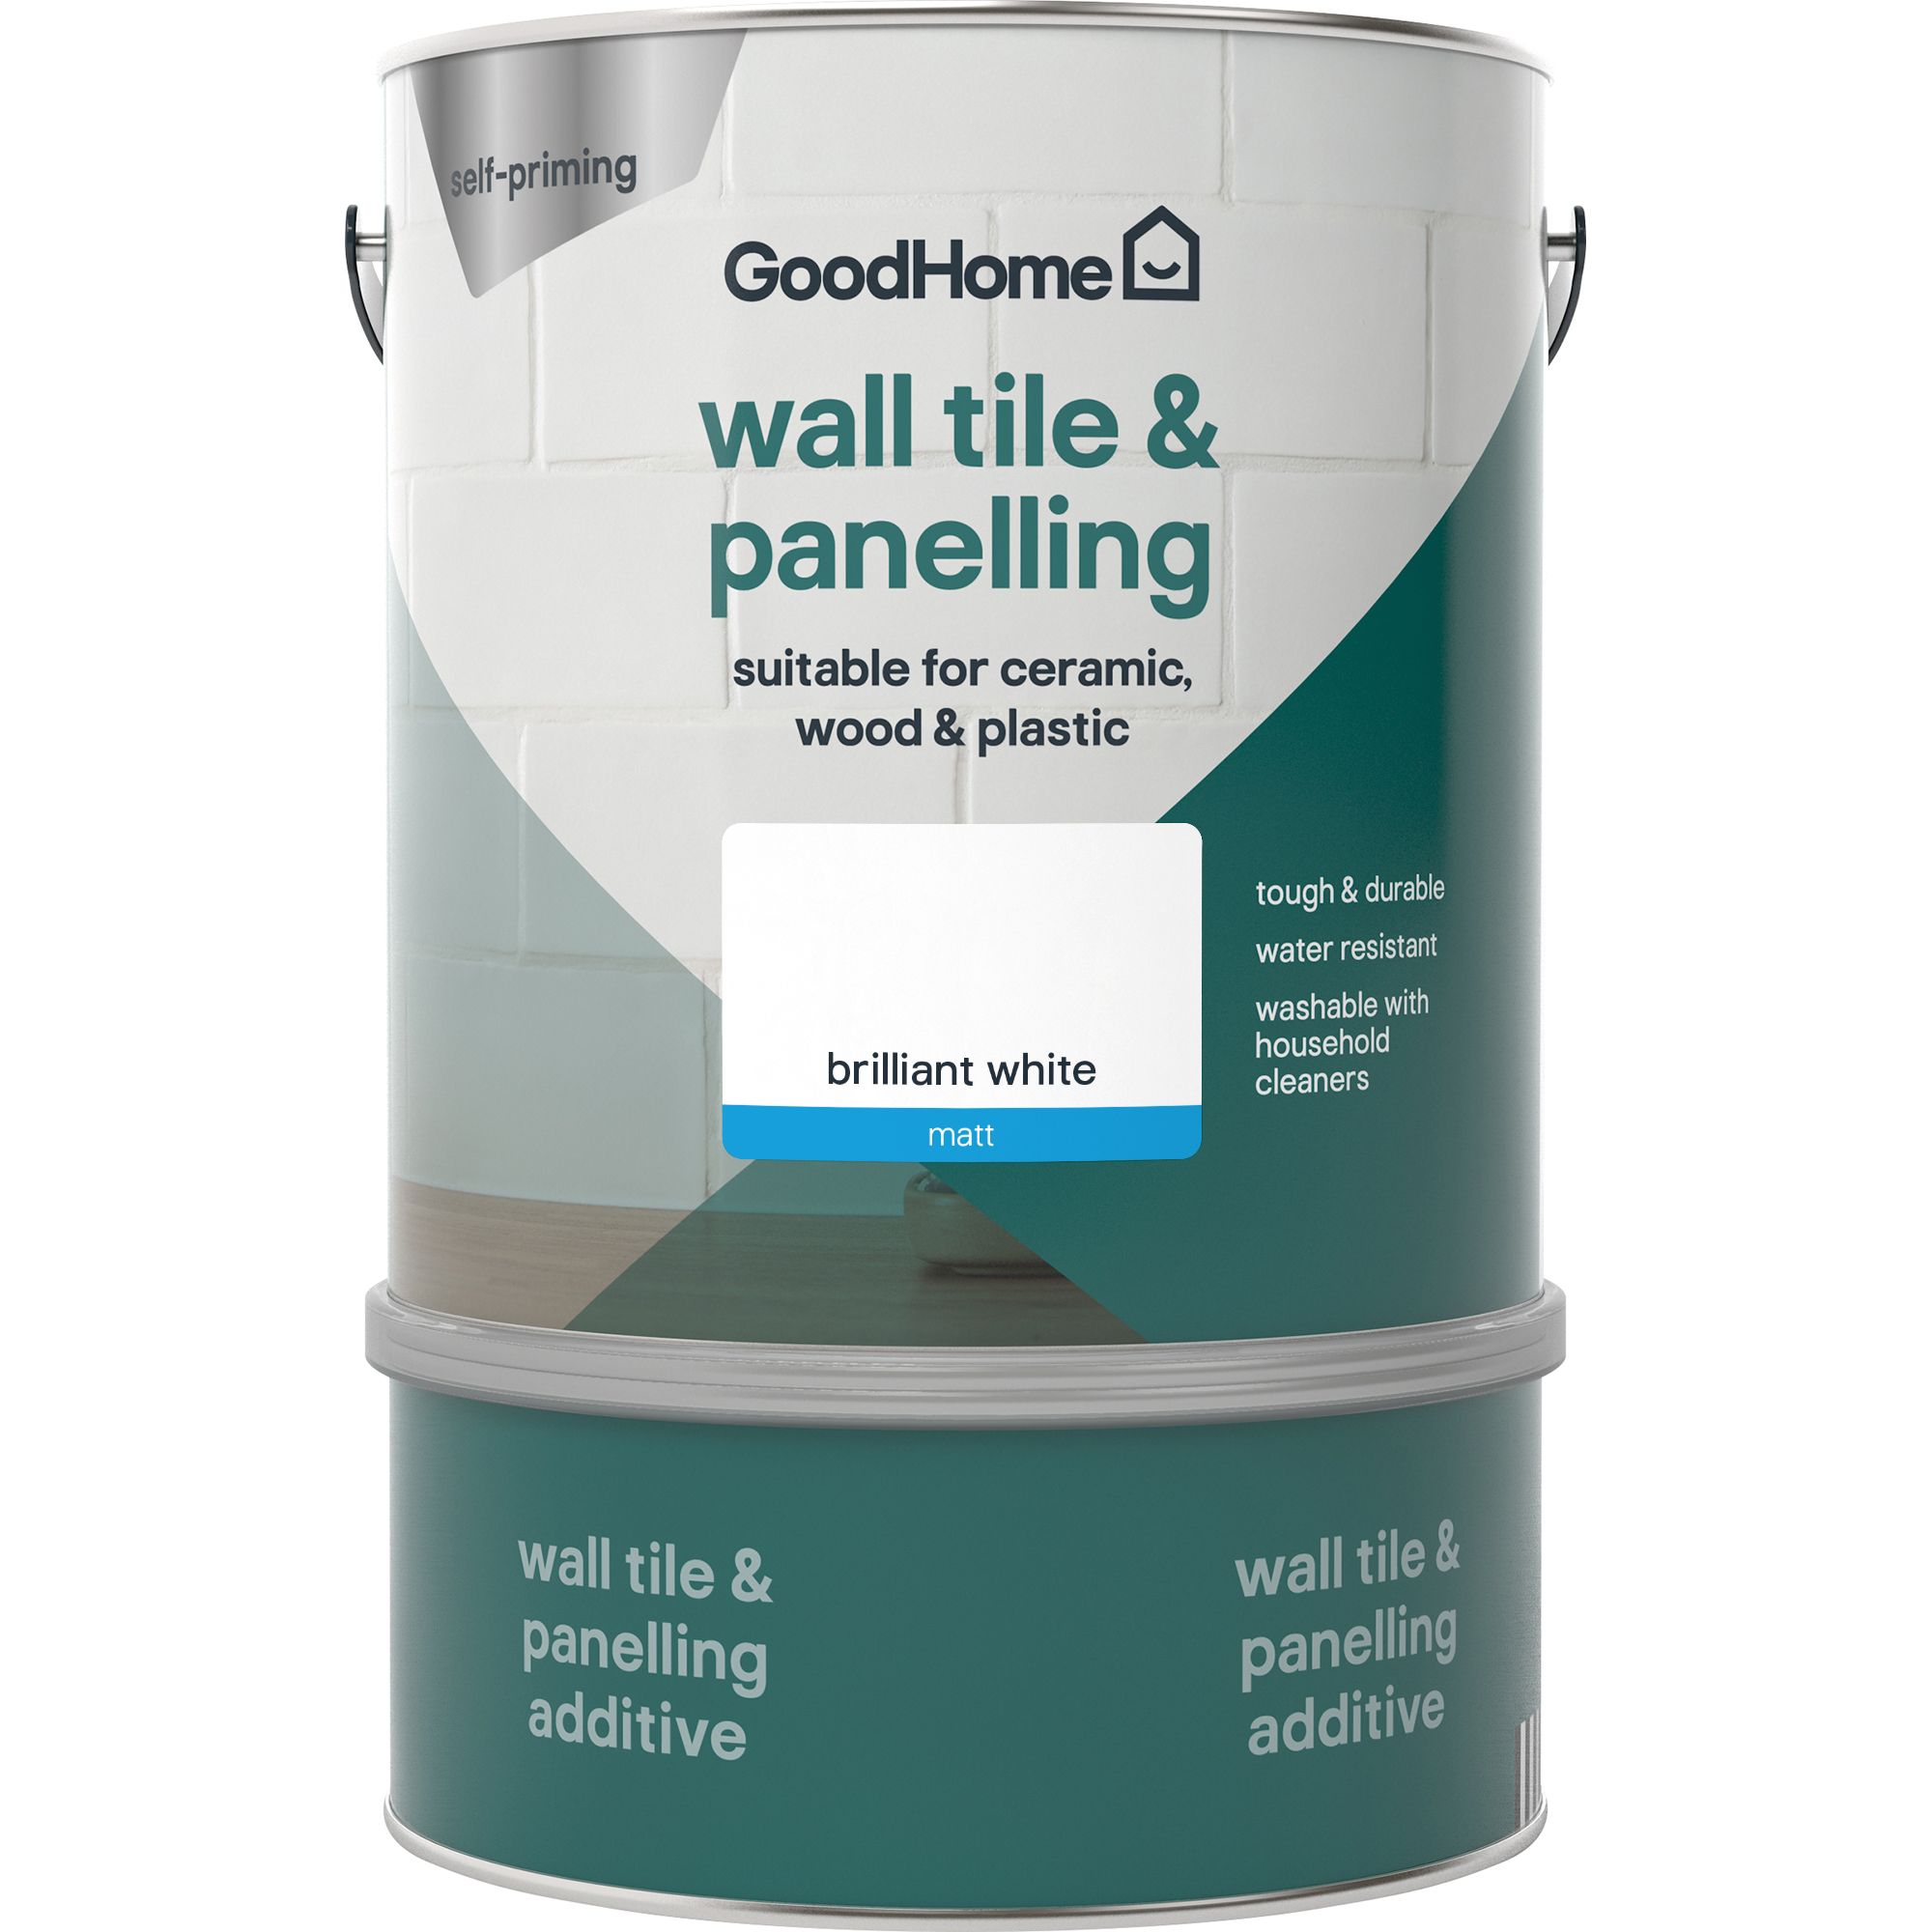 GoodHome Renovation Brilliant white Matt Wall tile & panelling paint, 2L